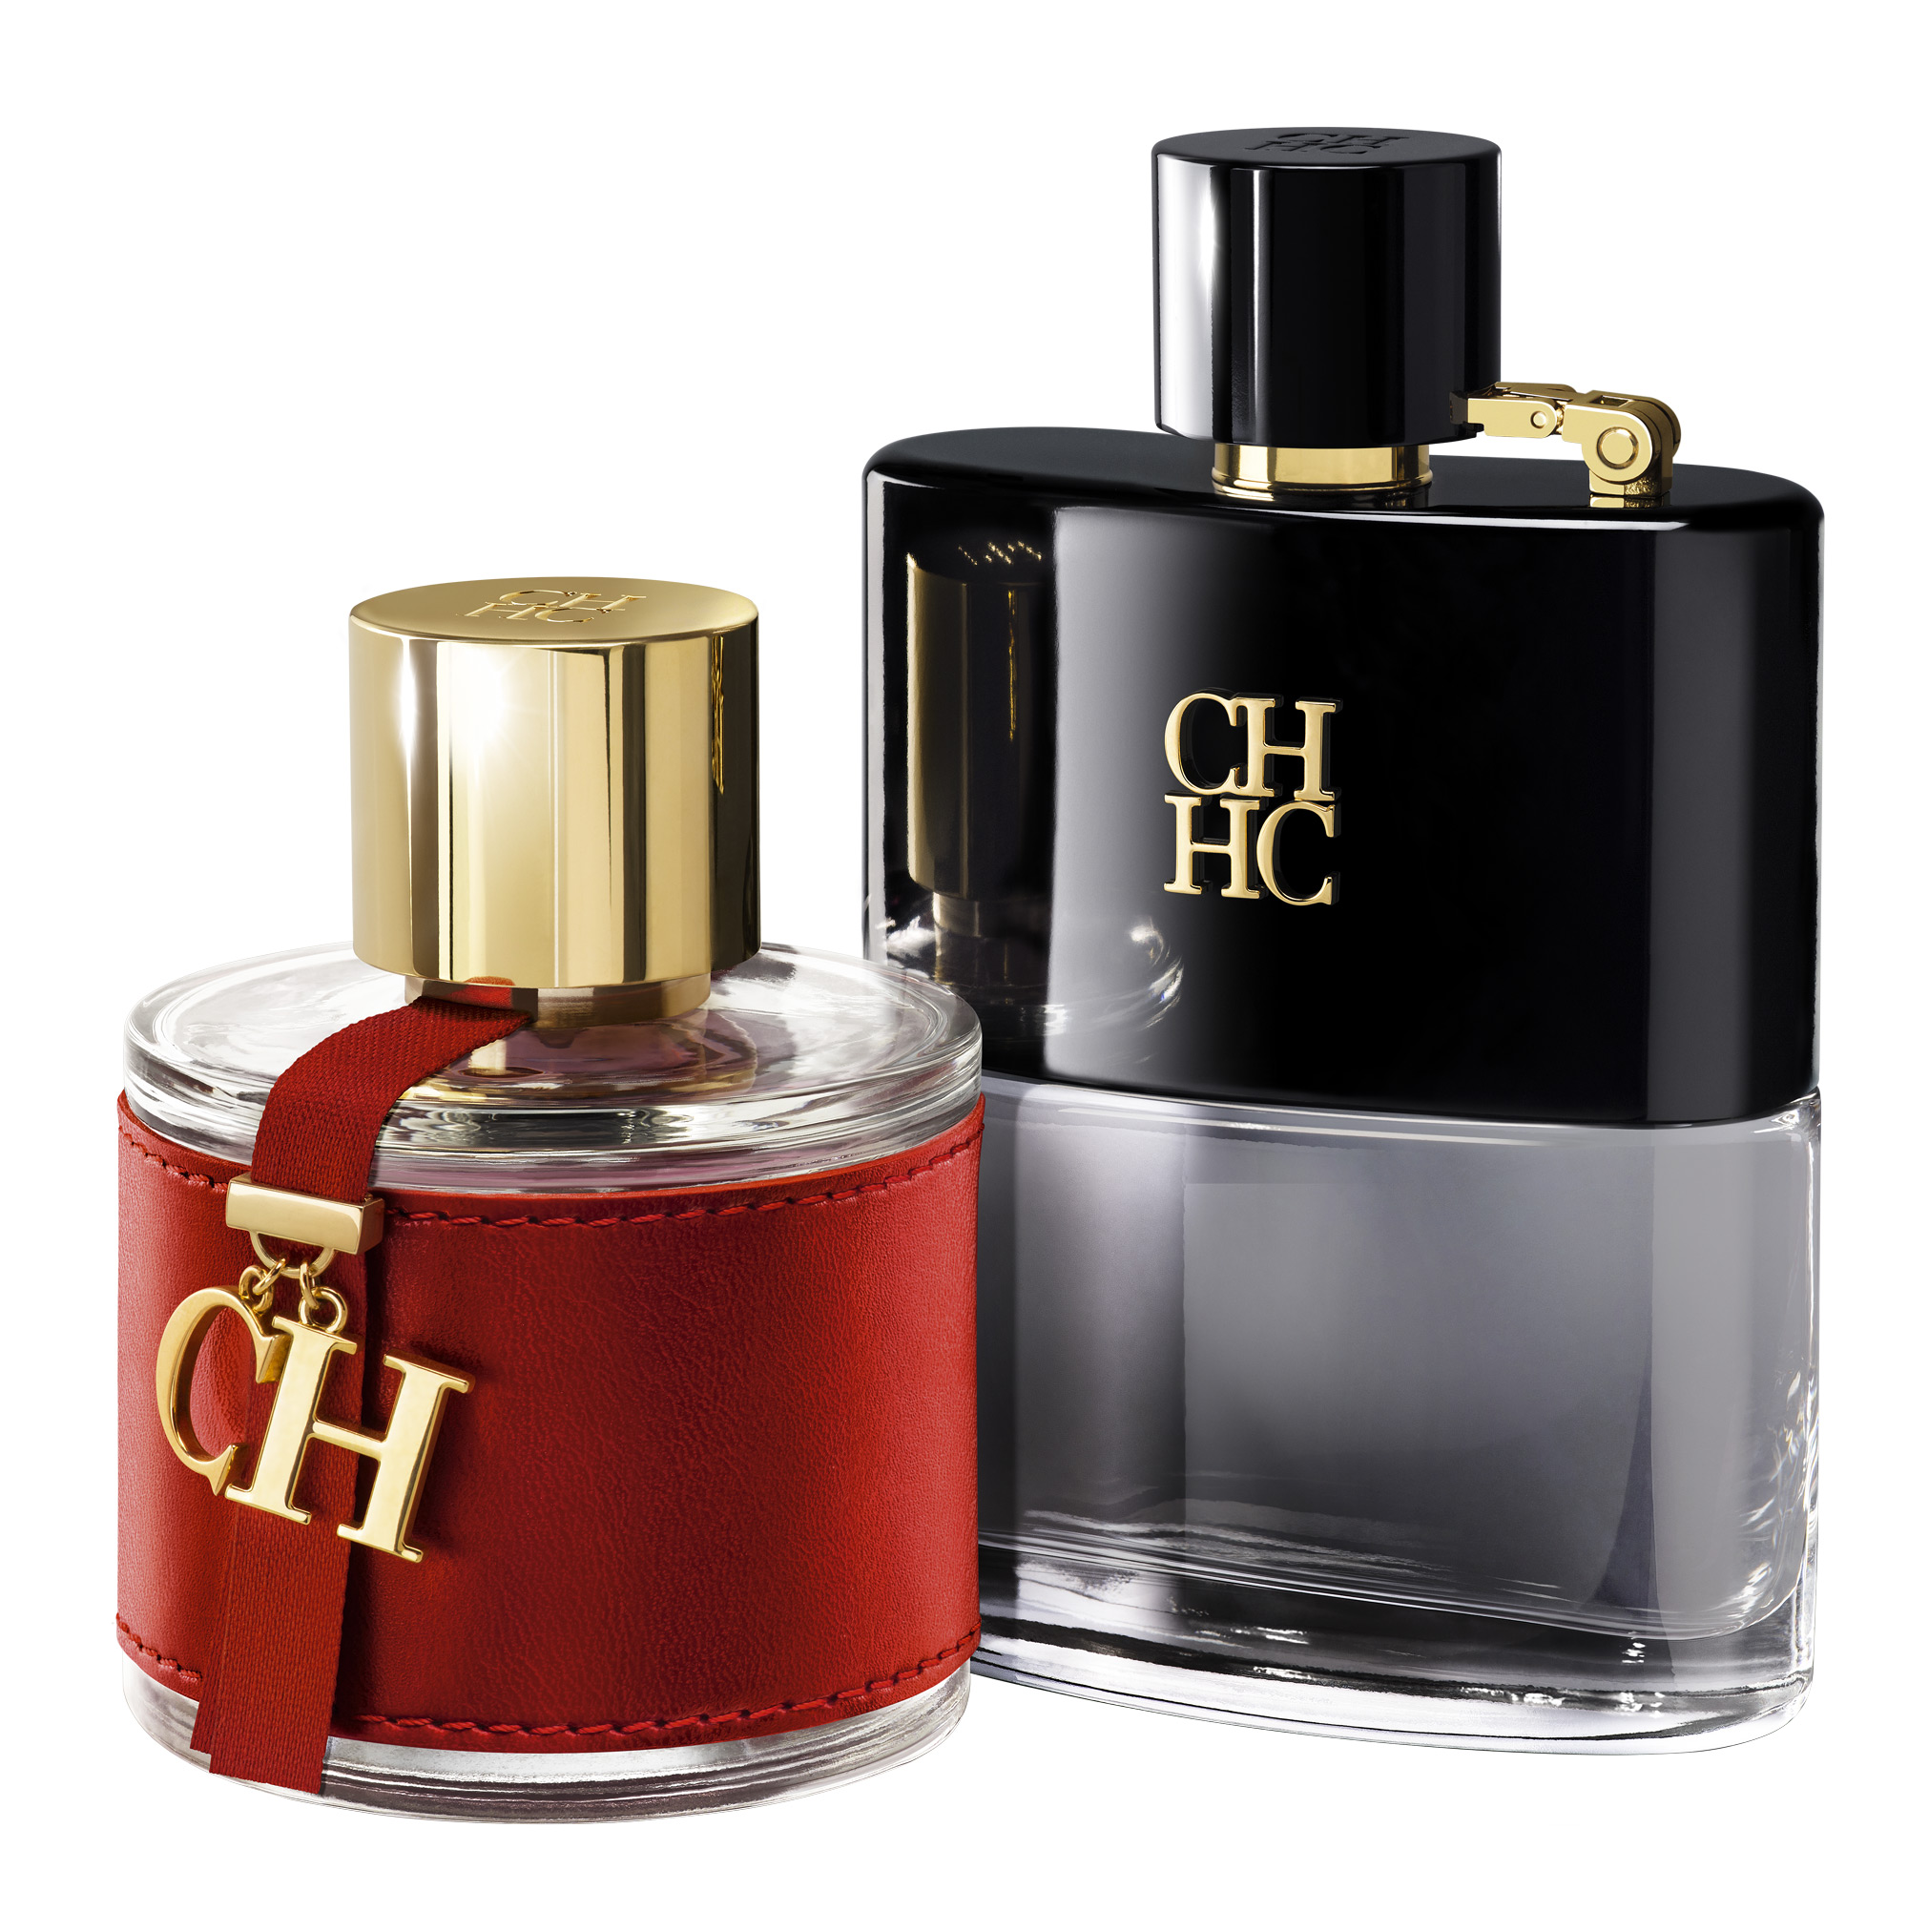 Parfum C&f Best Seller - Homecare24